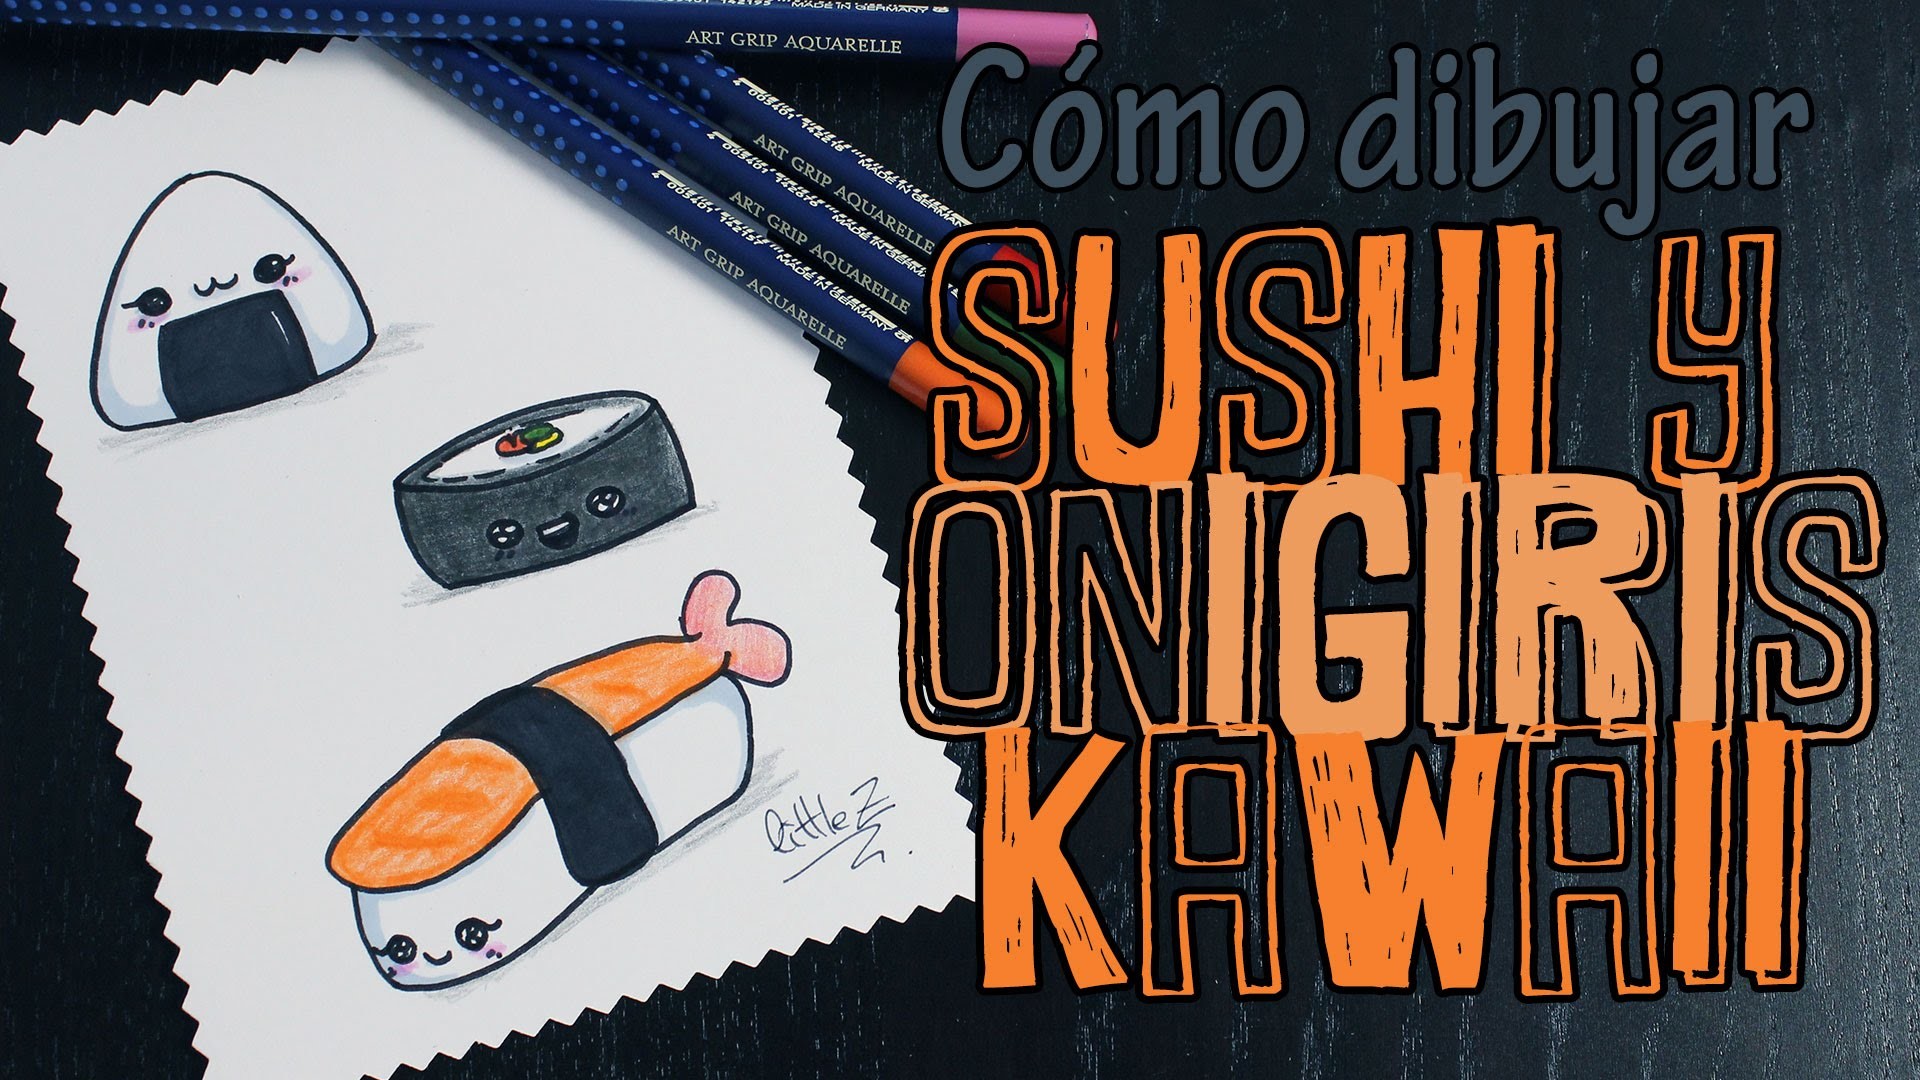 Cómo dibujar sushi y onigiris kawaii. How to draw a kawaii sushi